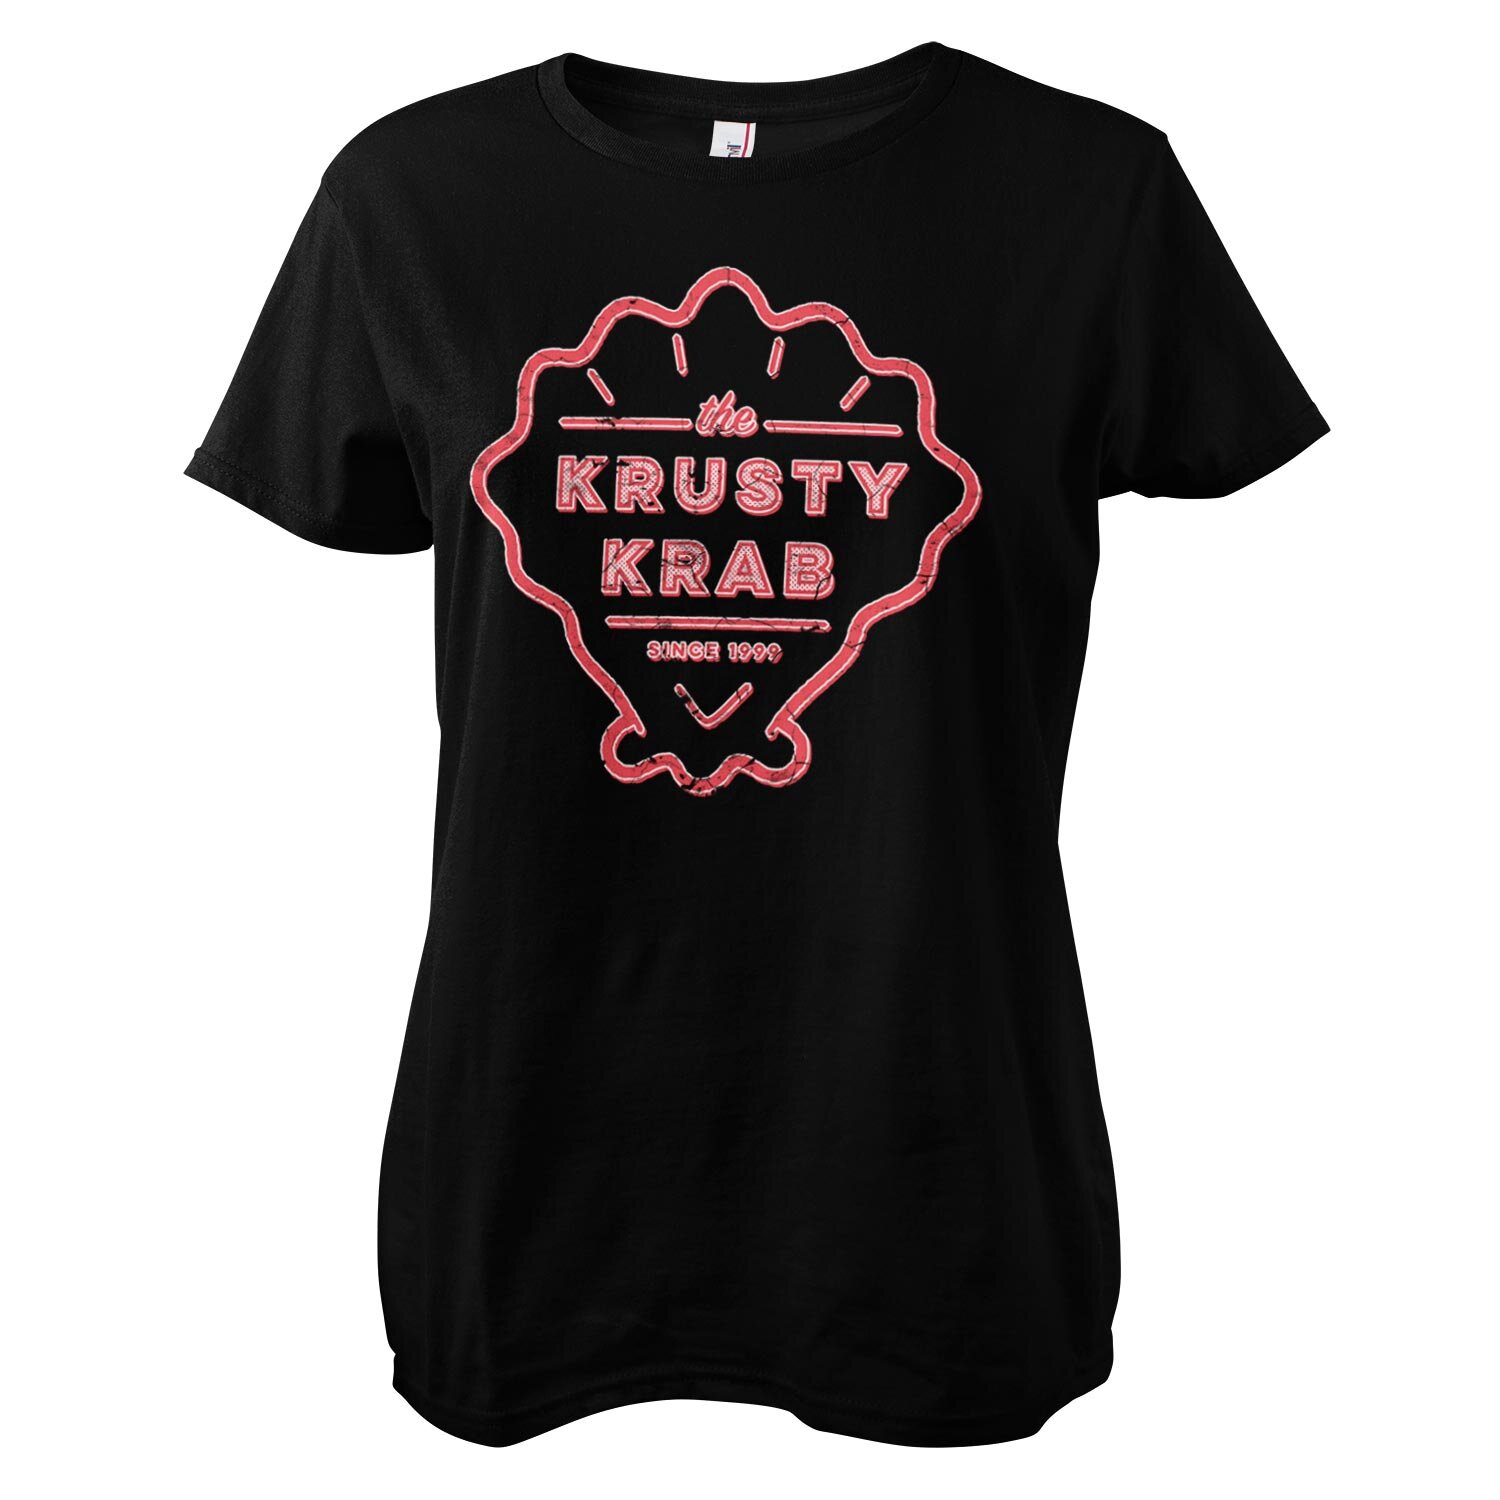 The Krusty Krab Since 1999 Girly Tee